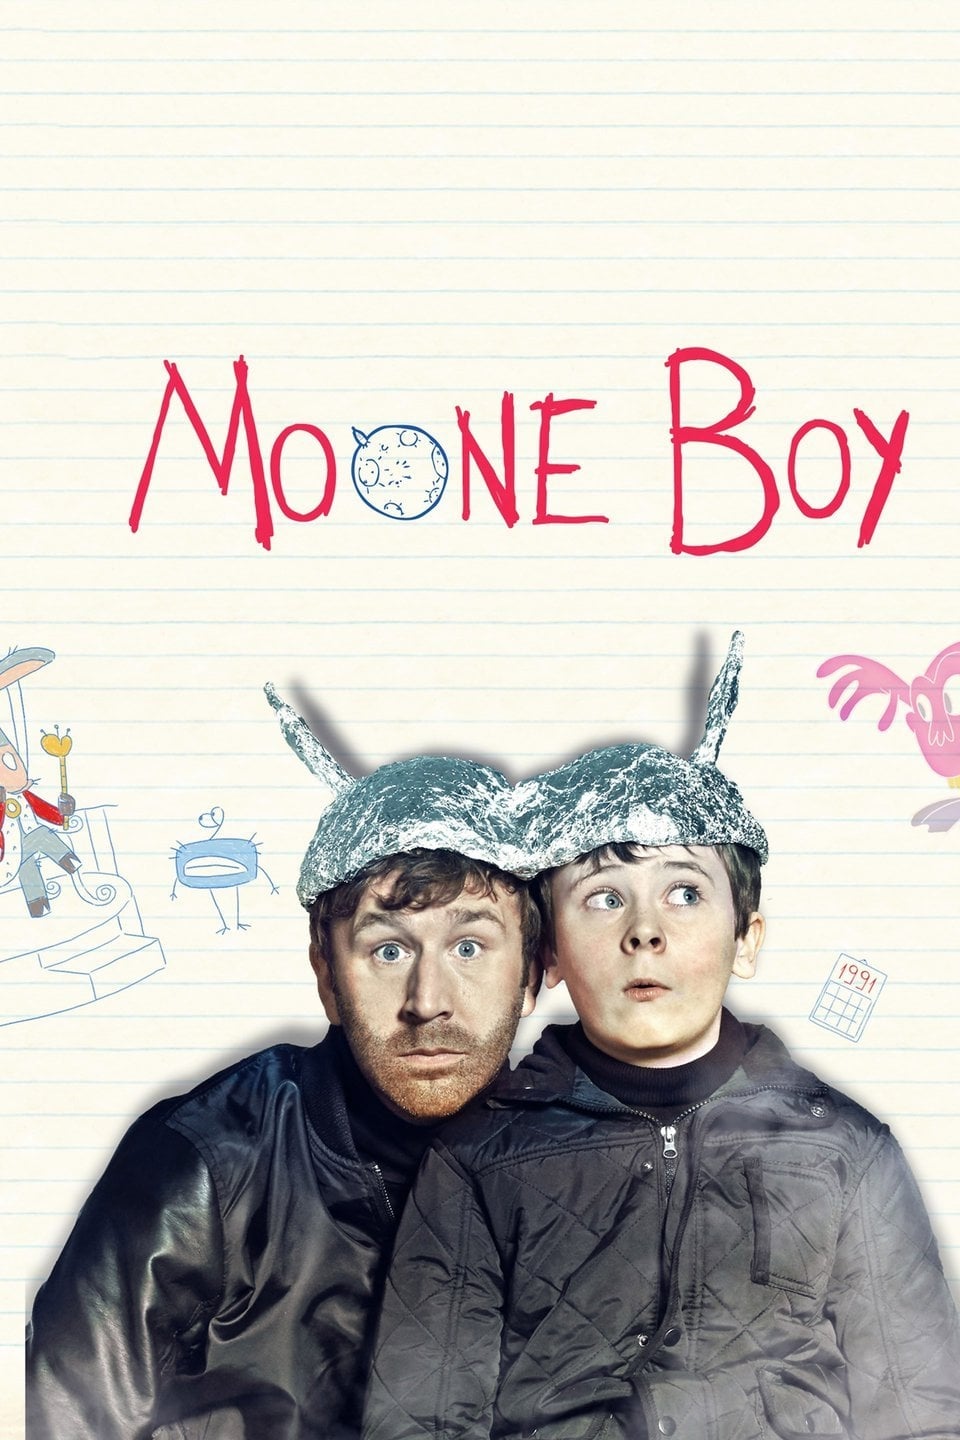 Moone Boy poster